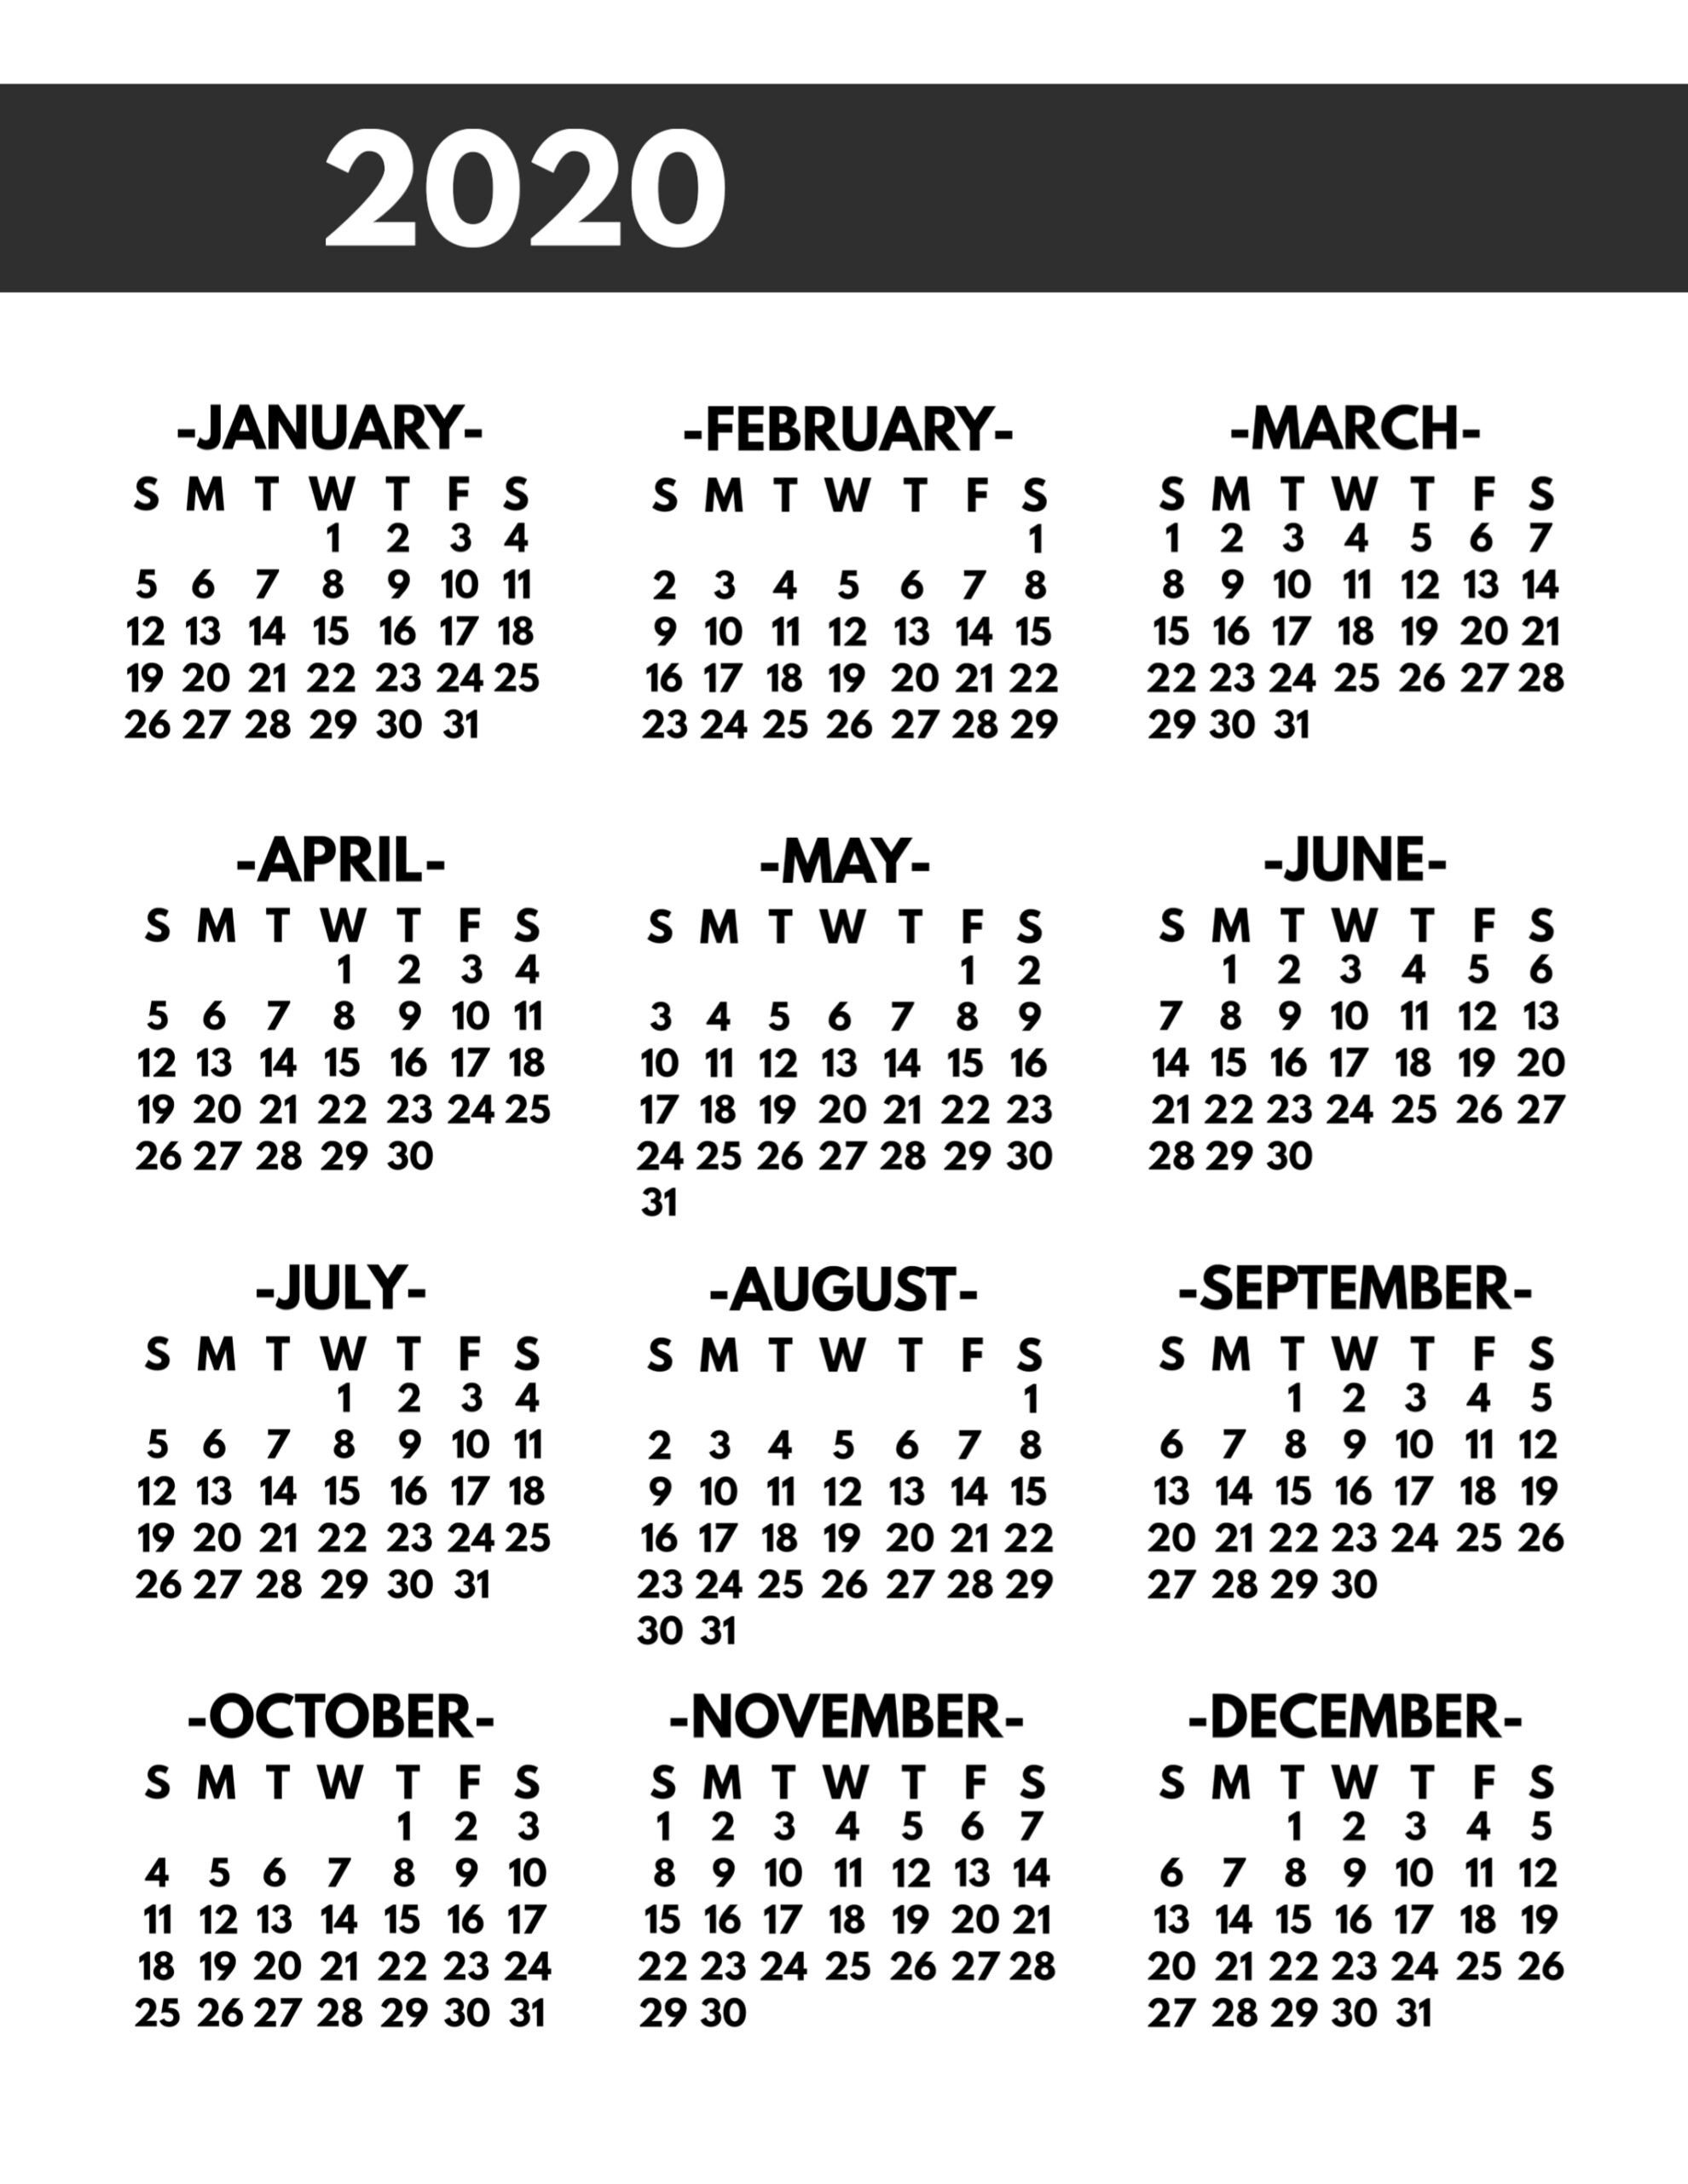 2020 Printable One Page Year At A Glance Calendar - Paper pertaining to Free Year At A Glance Calendar 2020 Printable